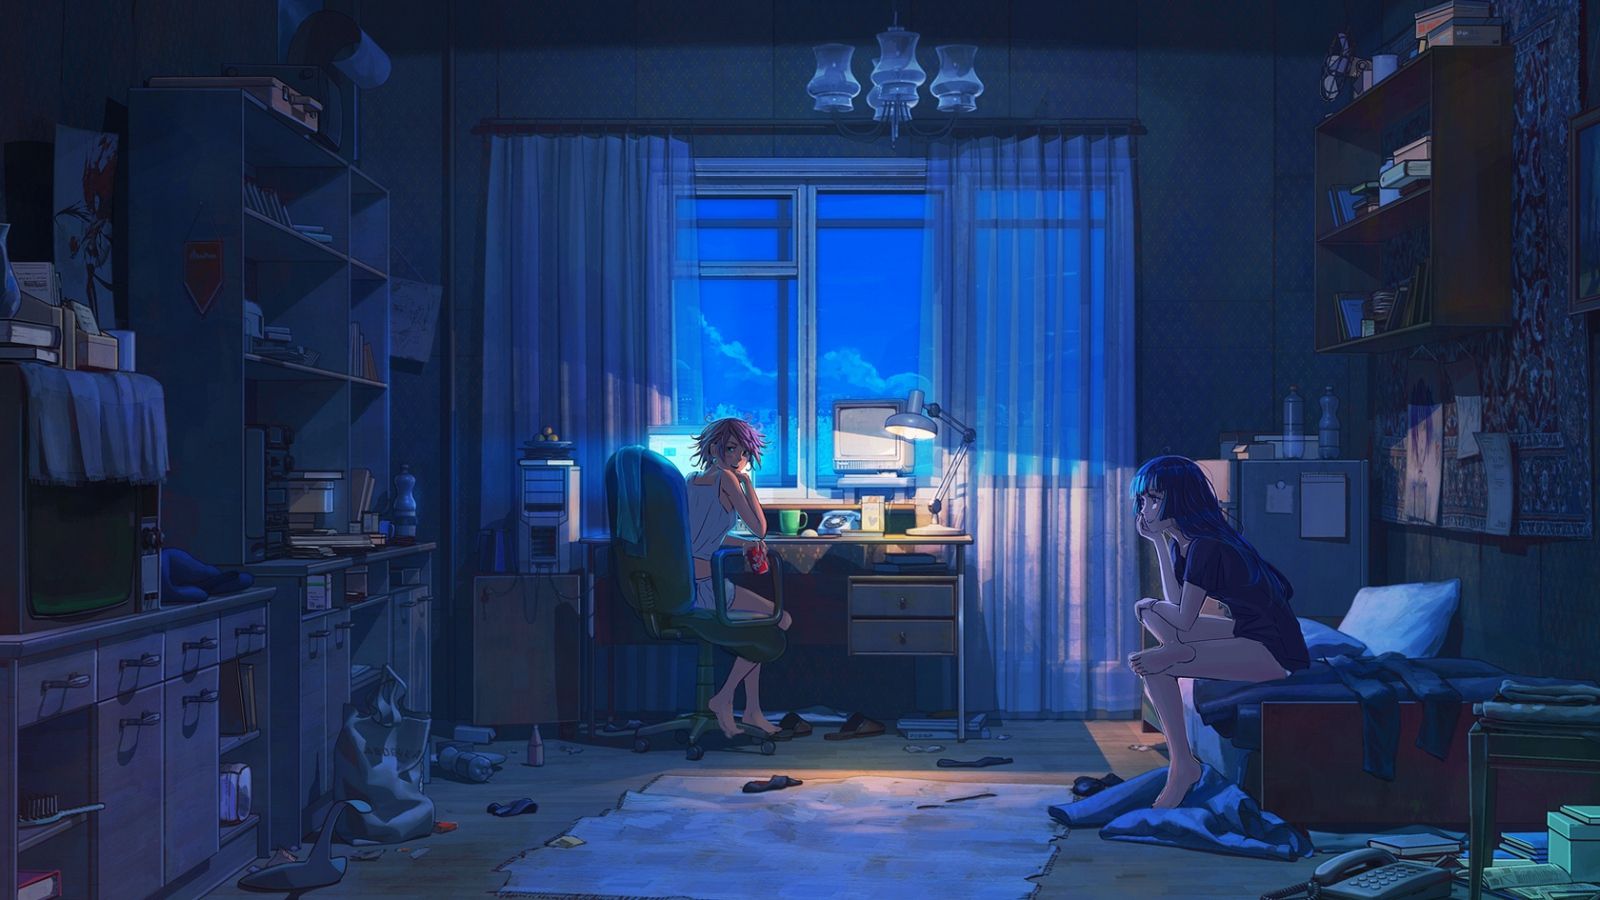 Download Wallpaper 1600x900 Night, Room, Girls, Friends, Things. Anime wallpaper 1920x Anime scenery wallpaper, Anime scenery